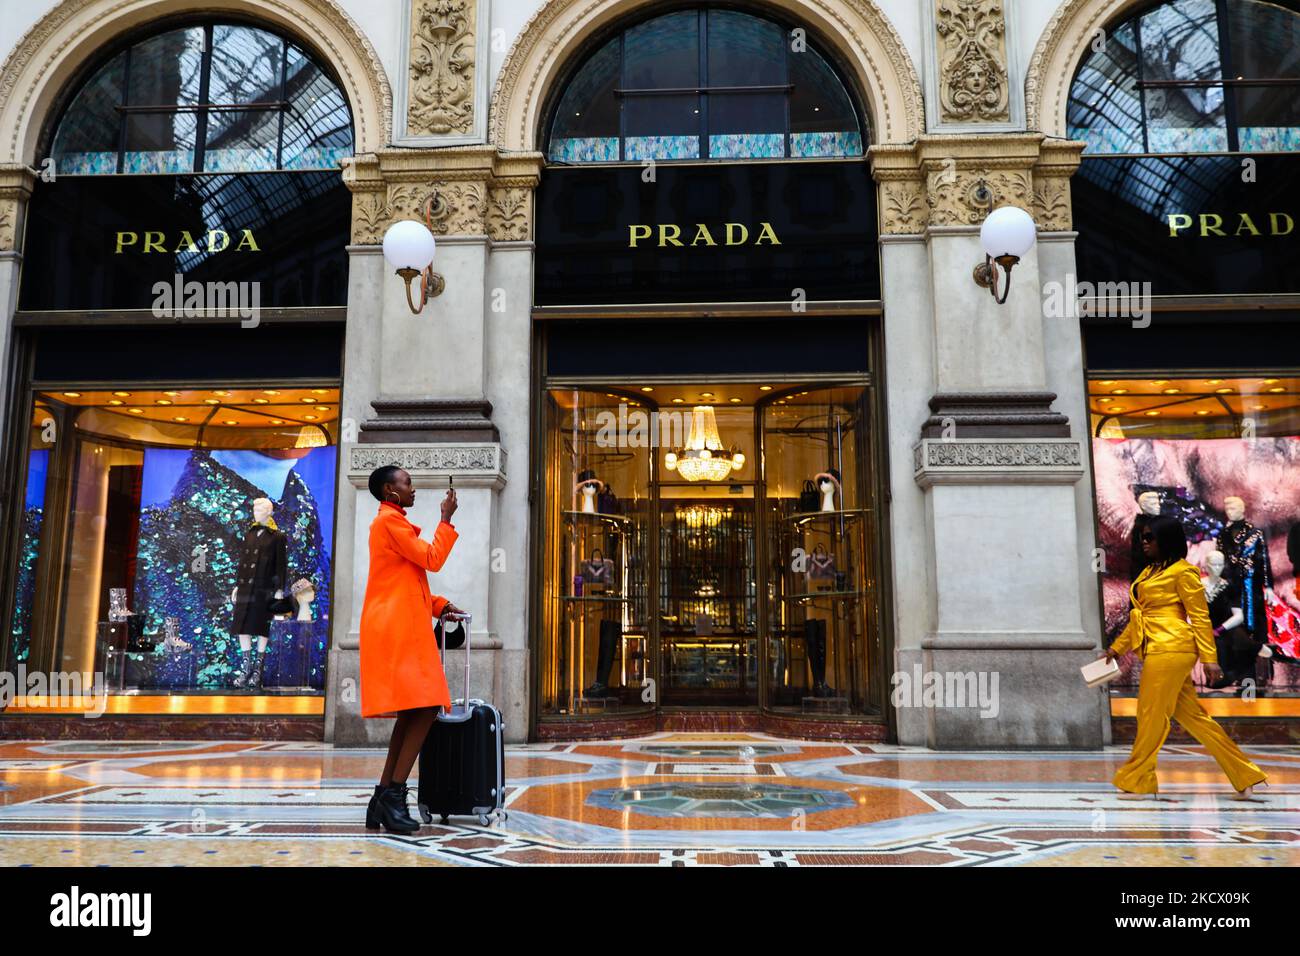 Prada store in Milan, Italy – Stock Editorial Photo © Madrabothair #54746601